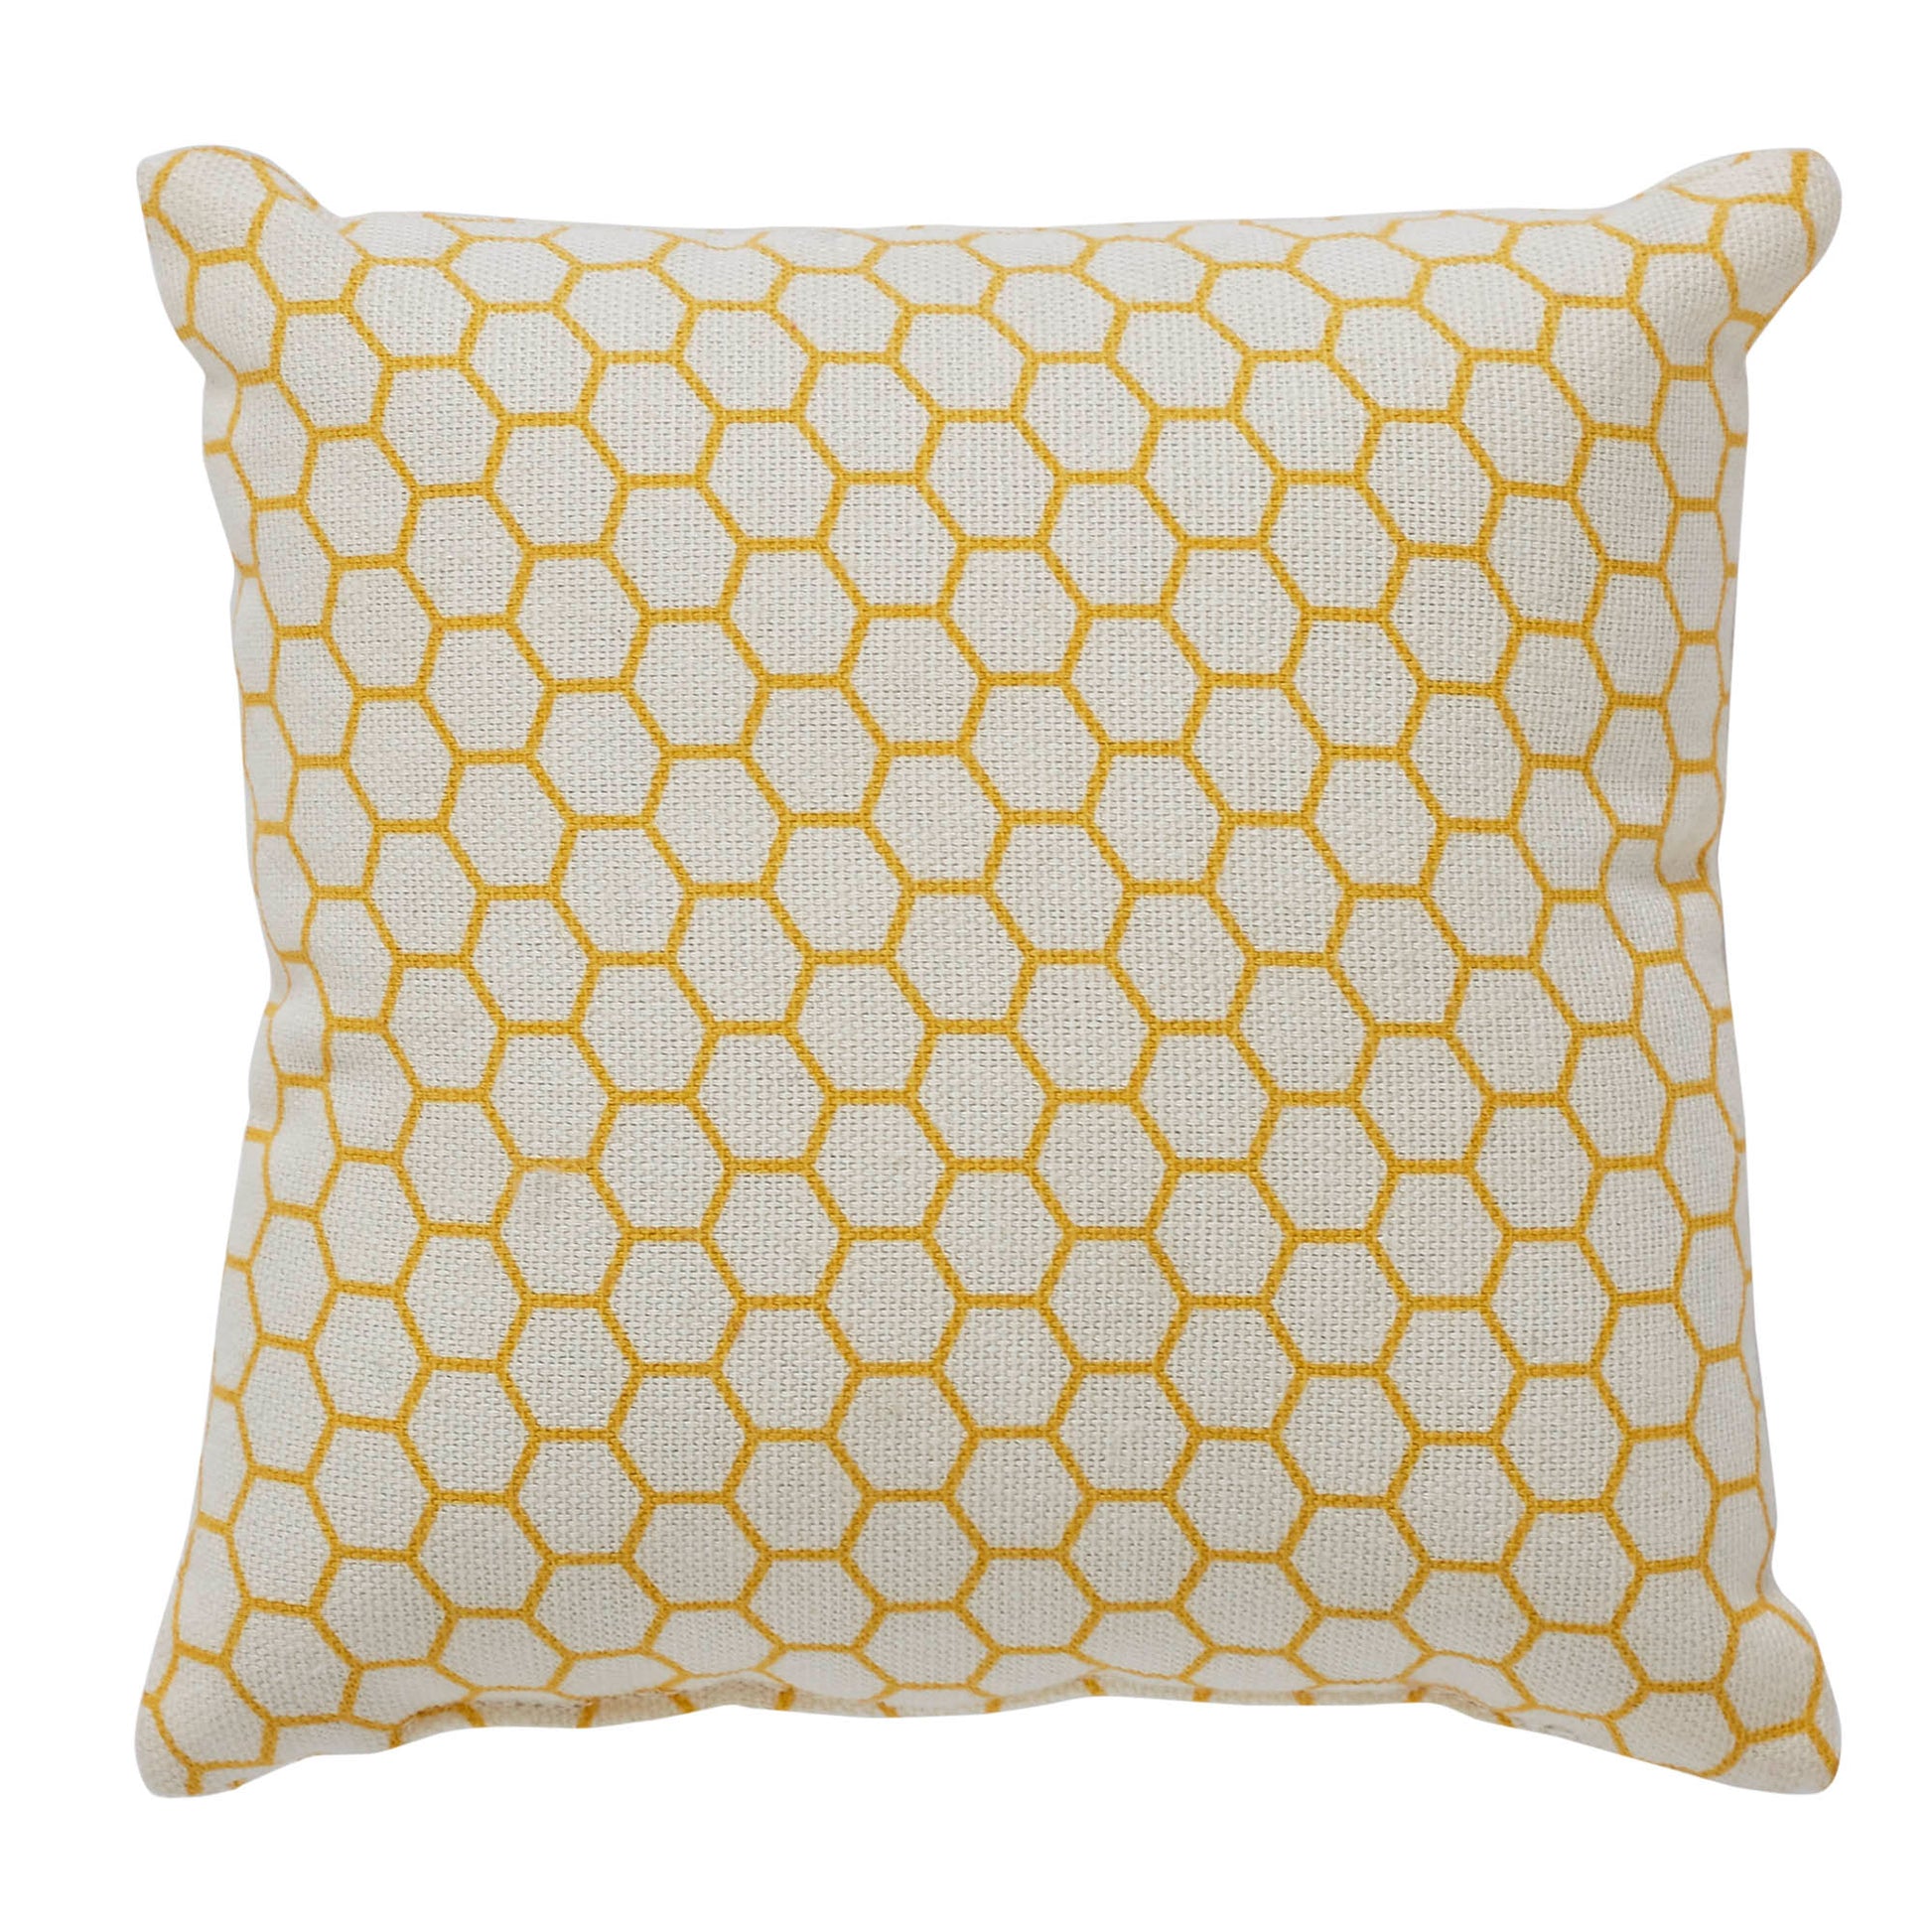 Buzzy Bees Bee Kind Pillow 6x6 SpadezStore